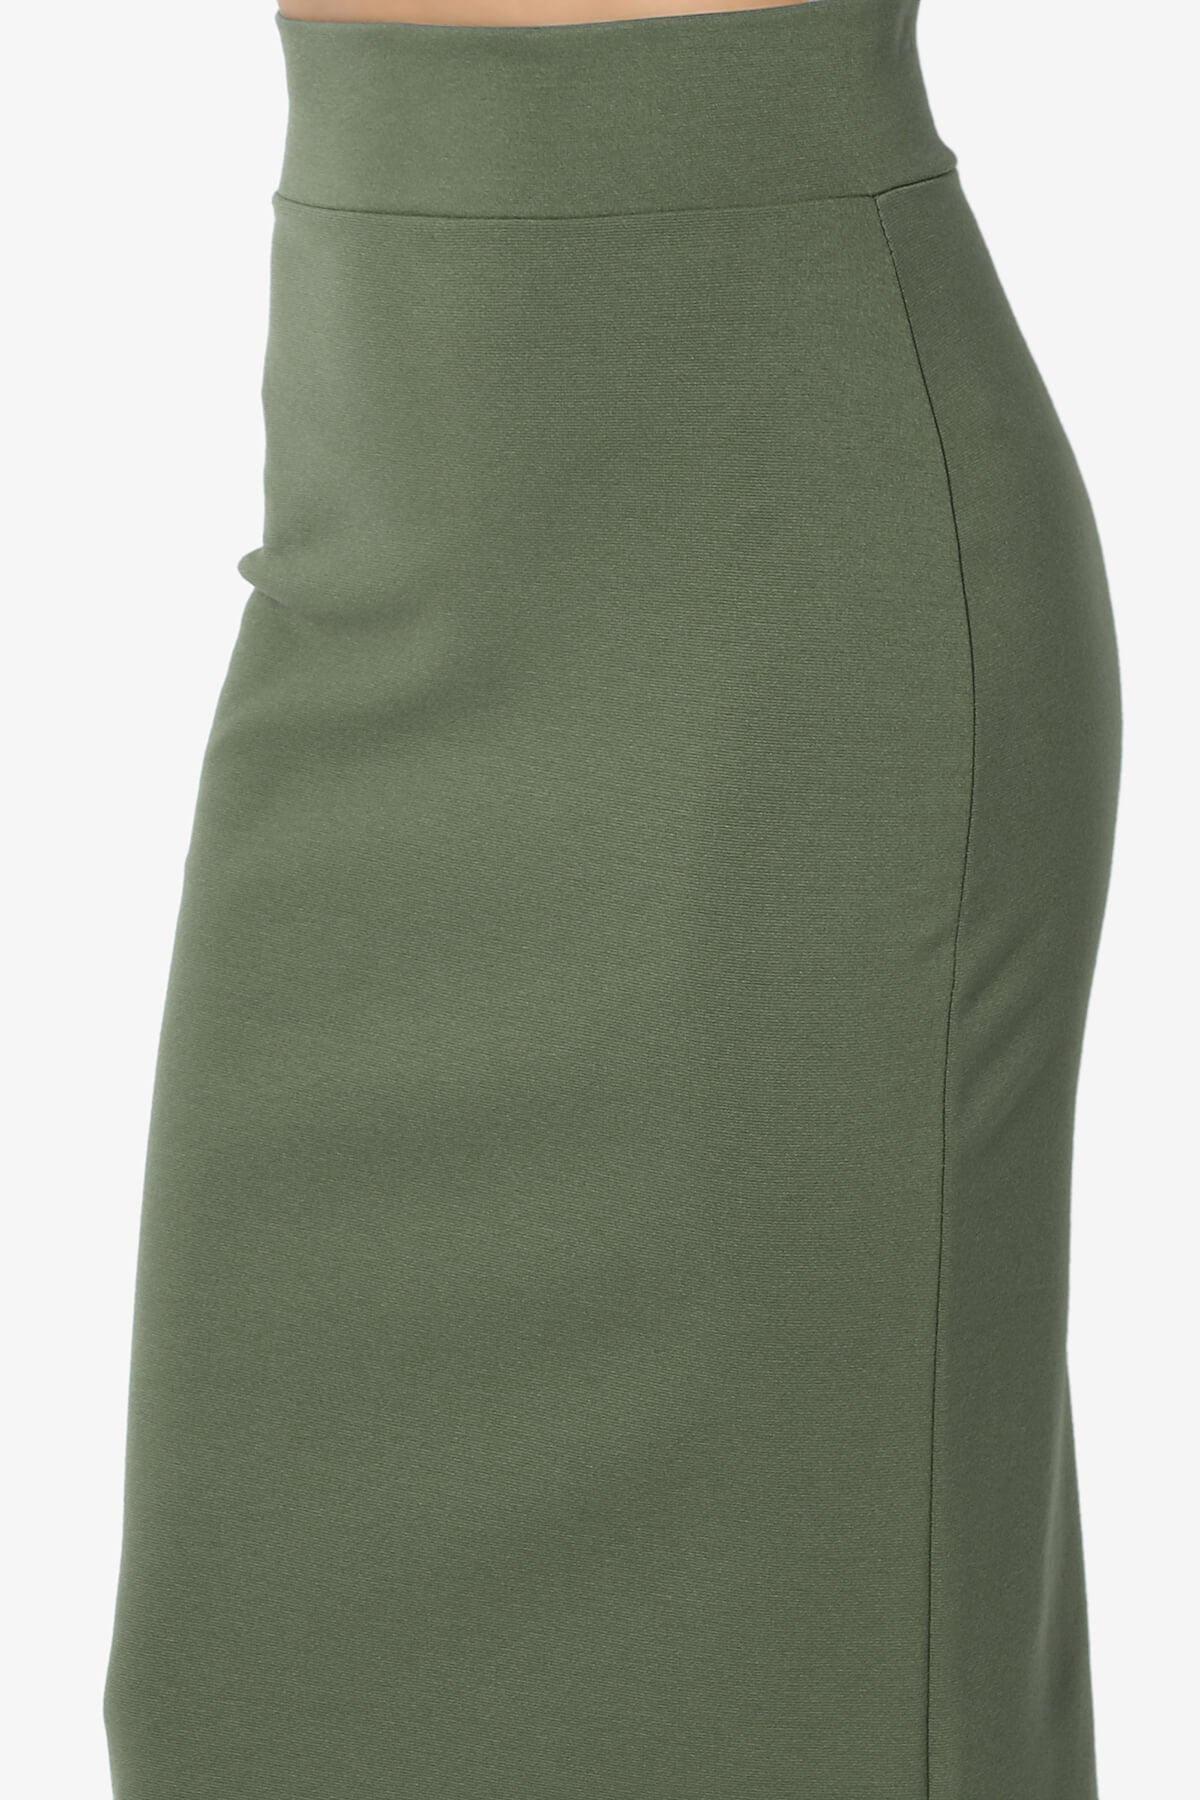 Carleta Mid Calf Pencil Skirt DUSTY OLIVE_5